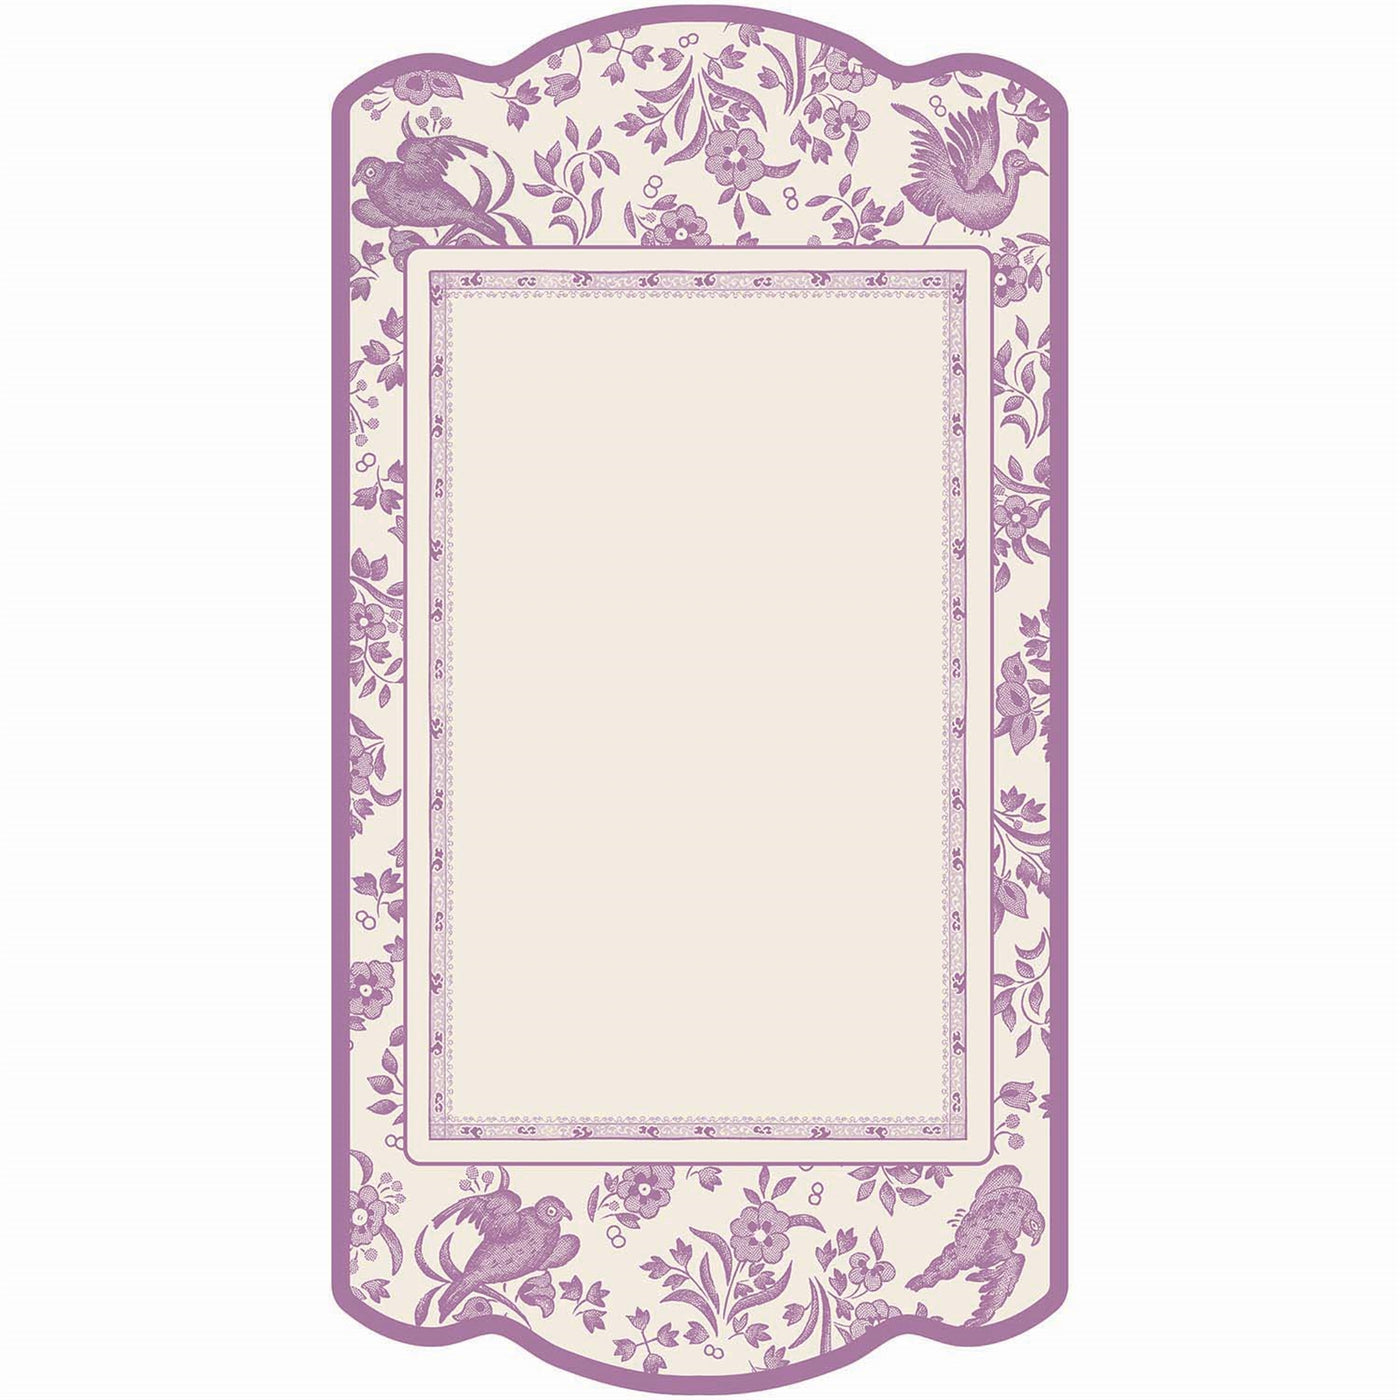 Lilac Regal Peacock Table Card